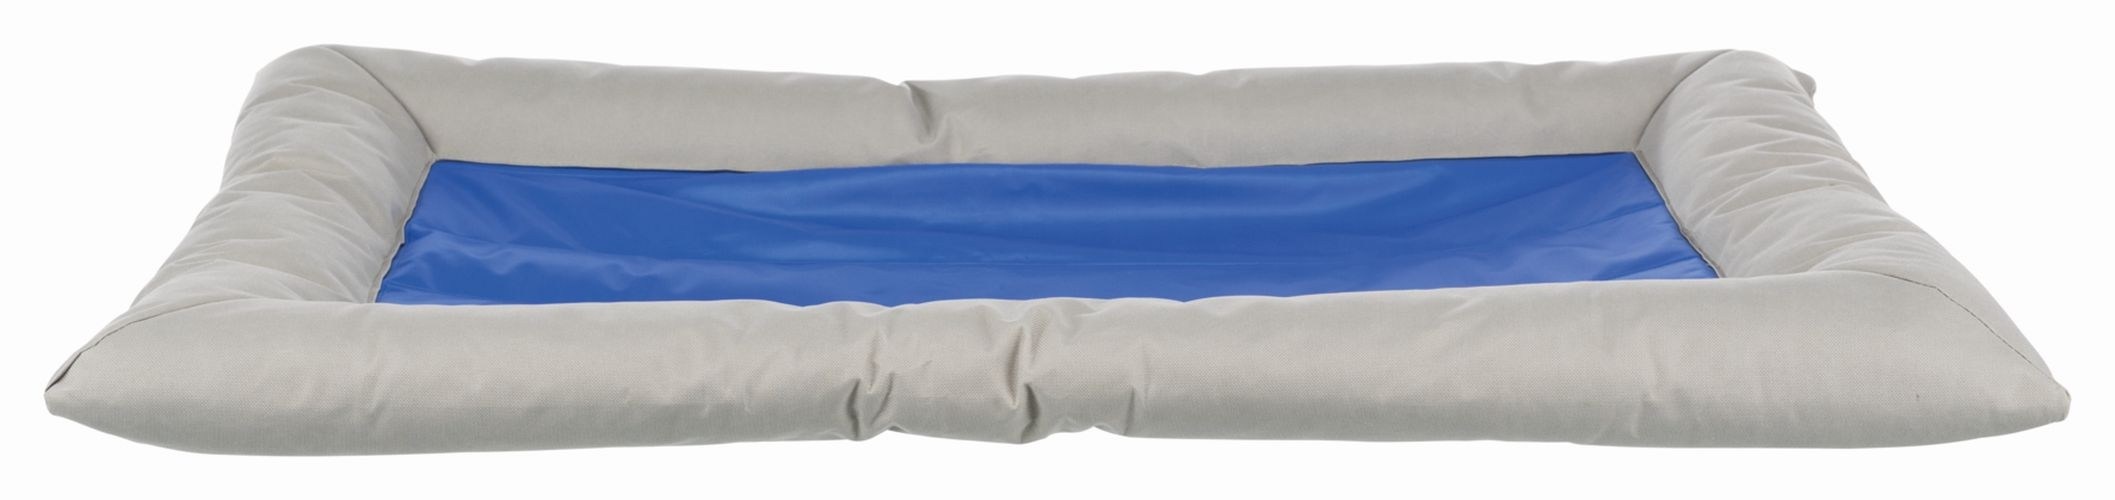 Охлаждающий лежак Cool Dreamer, 90 х 55 см, серый/синий БЕЗ ВОДЫ